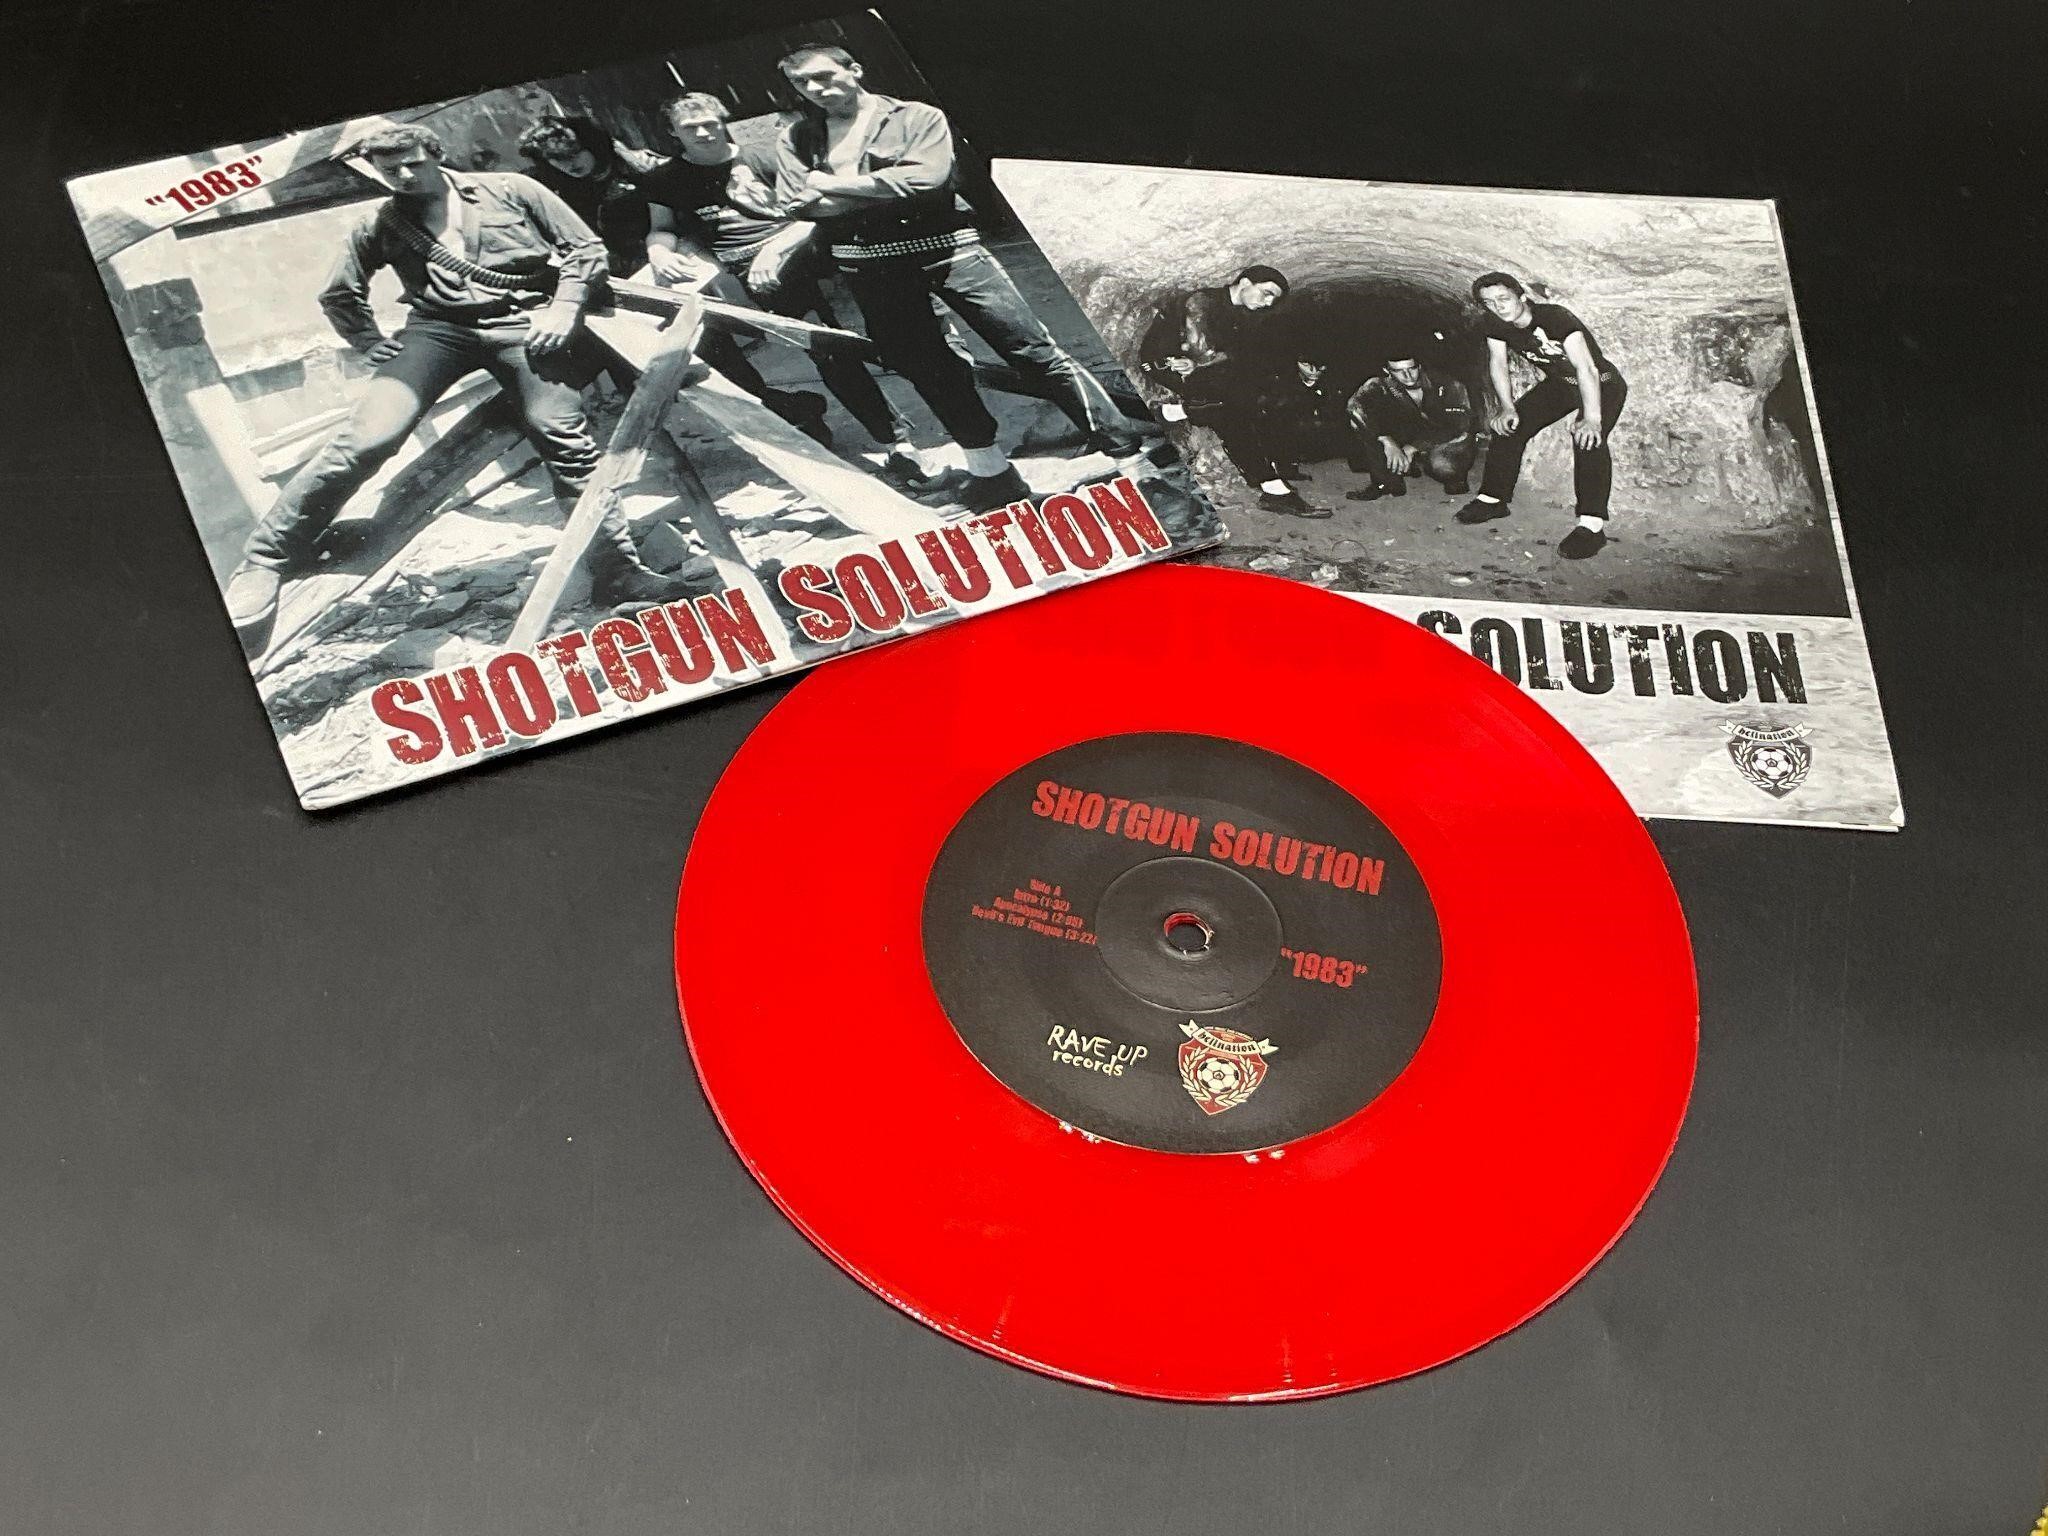 2016 Shotgun Solution "1983" Punk 7" Single Italy